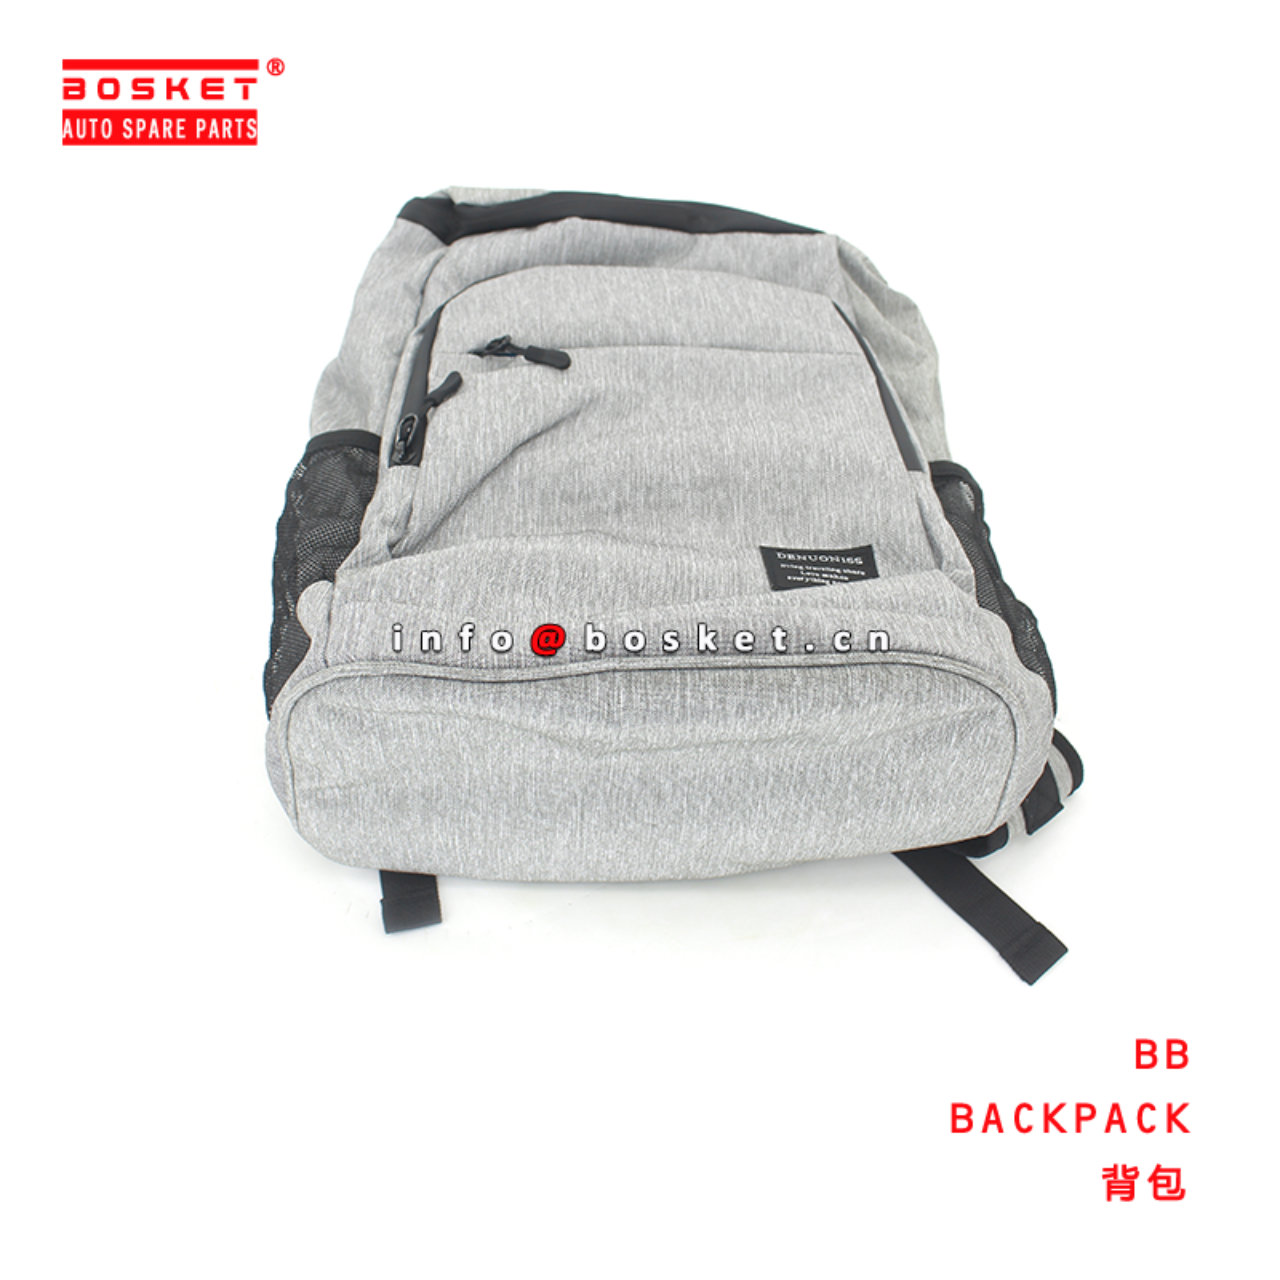 BB-ABA Backpack Suitable for ISUZU